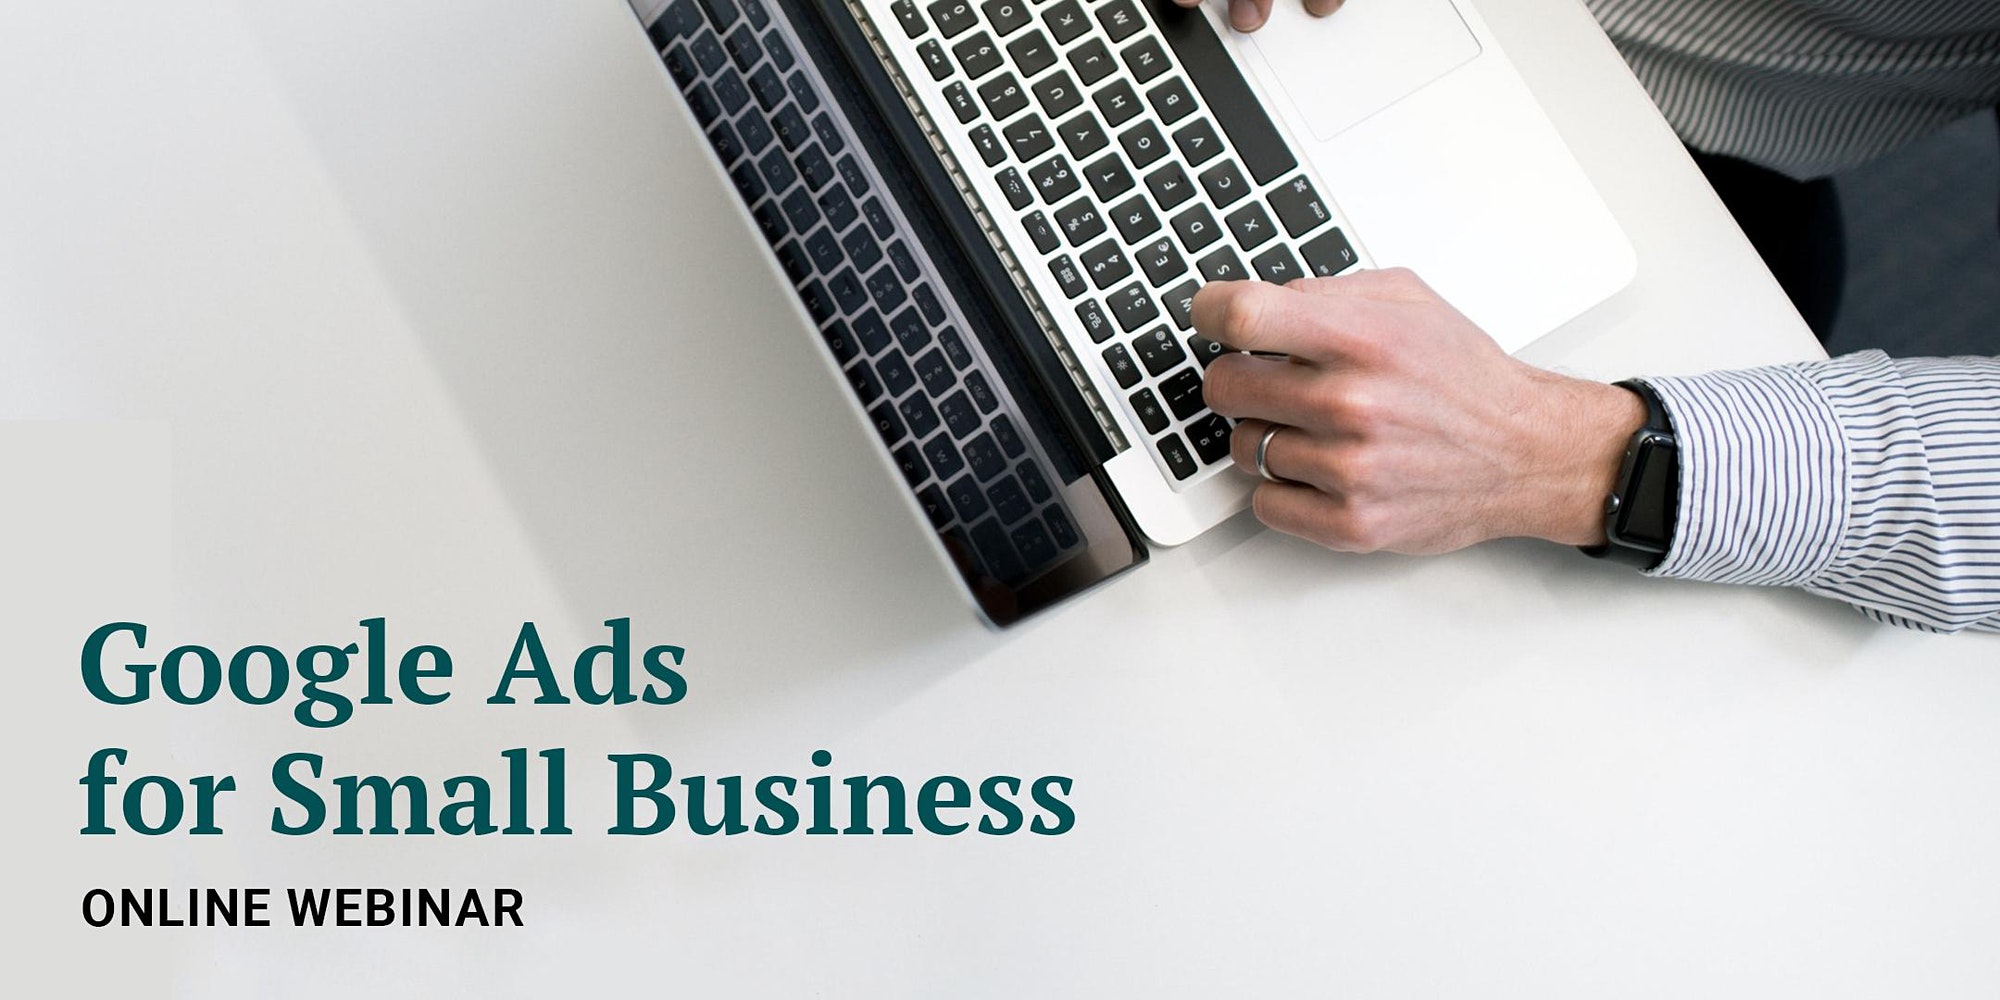 Google ads for small business: Online webinar